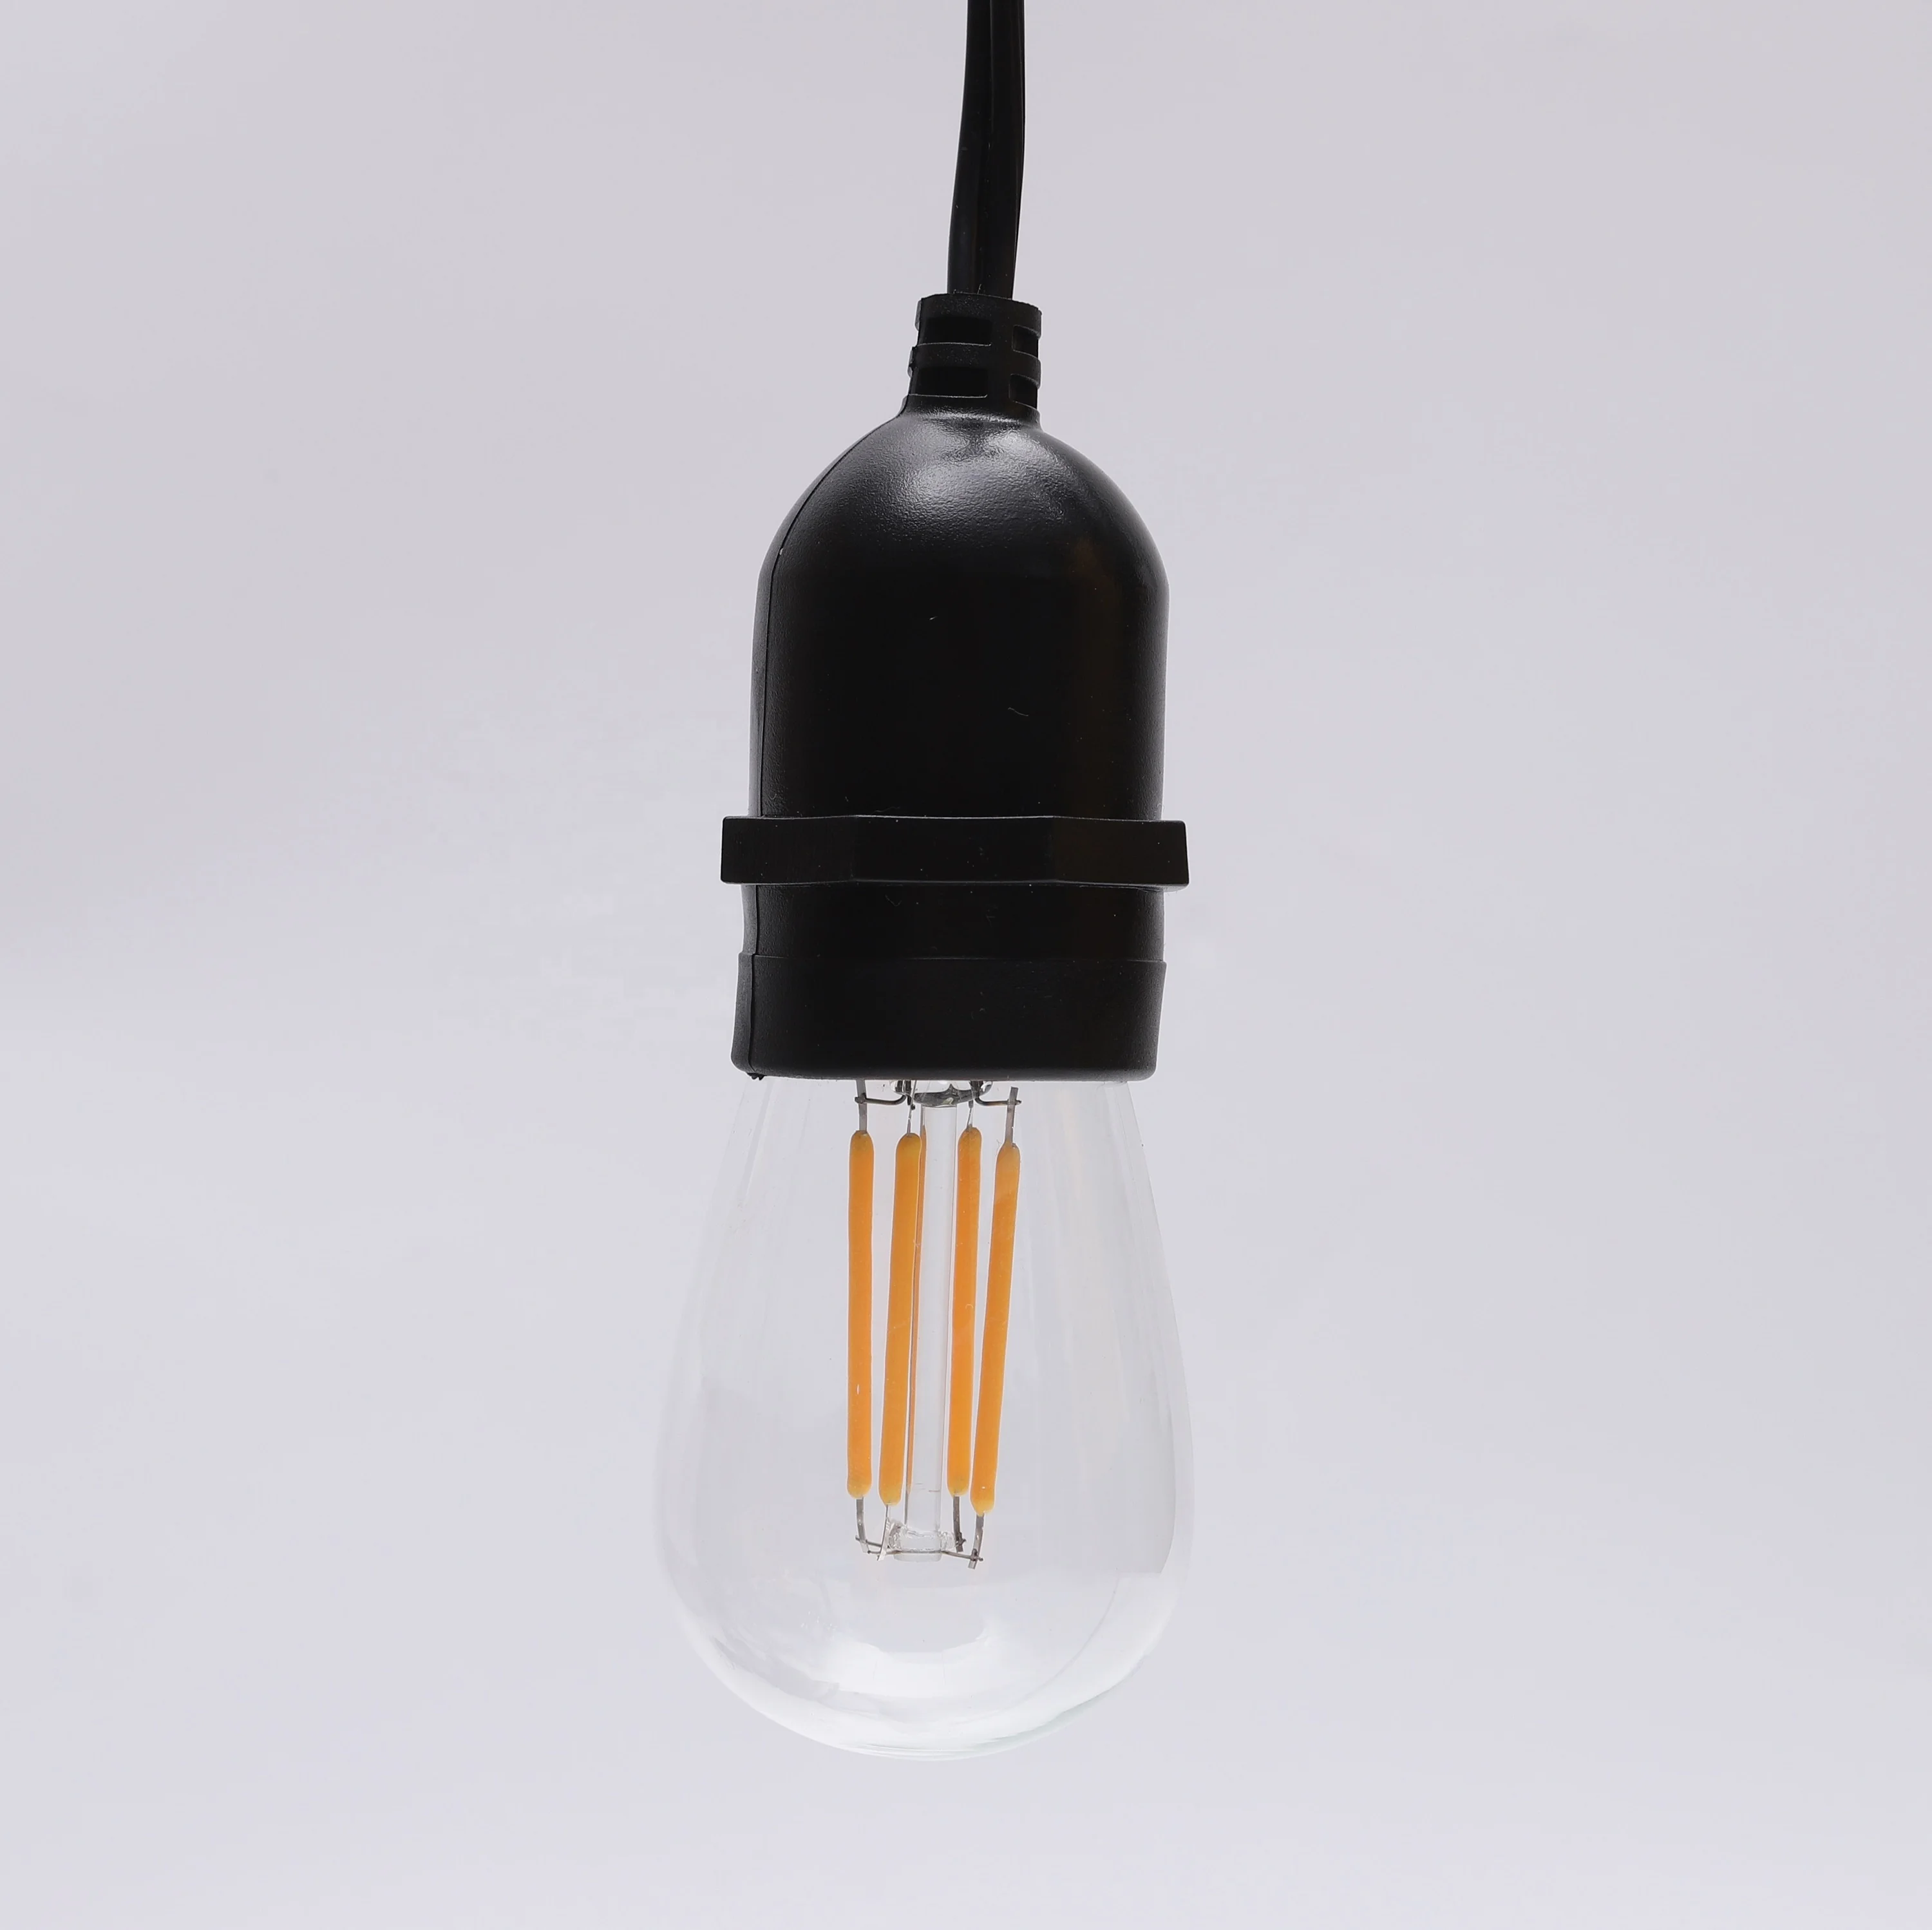 globe led light waterproof ST45 1.5W Filament led lamp bulbs Pear shaped lamp for LED drop string light Christmas use